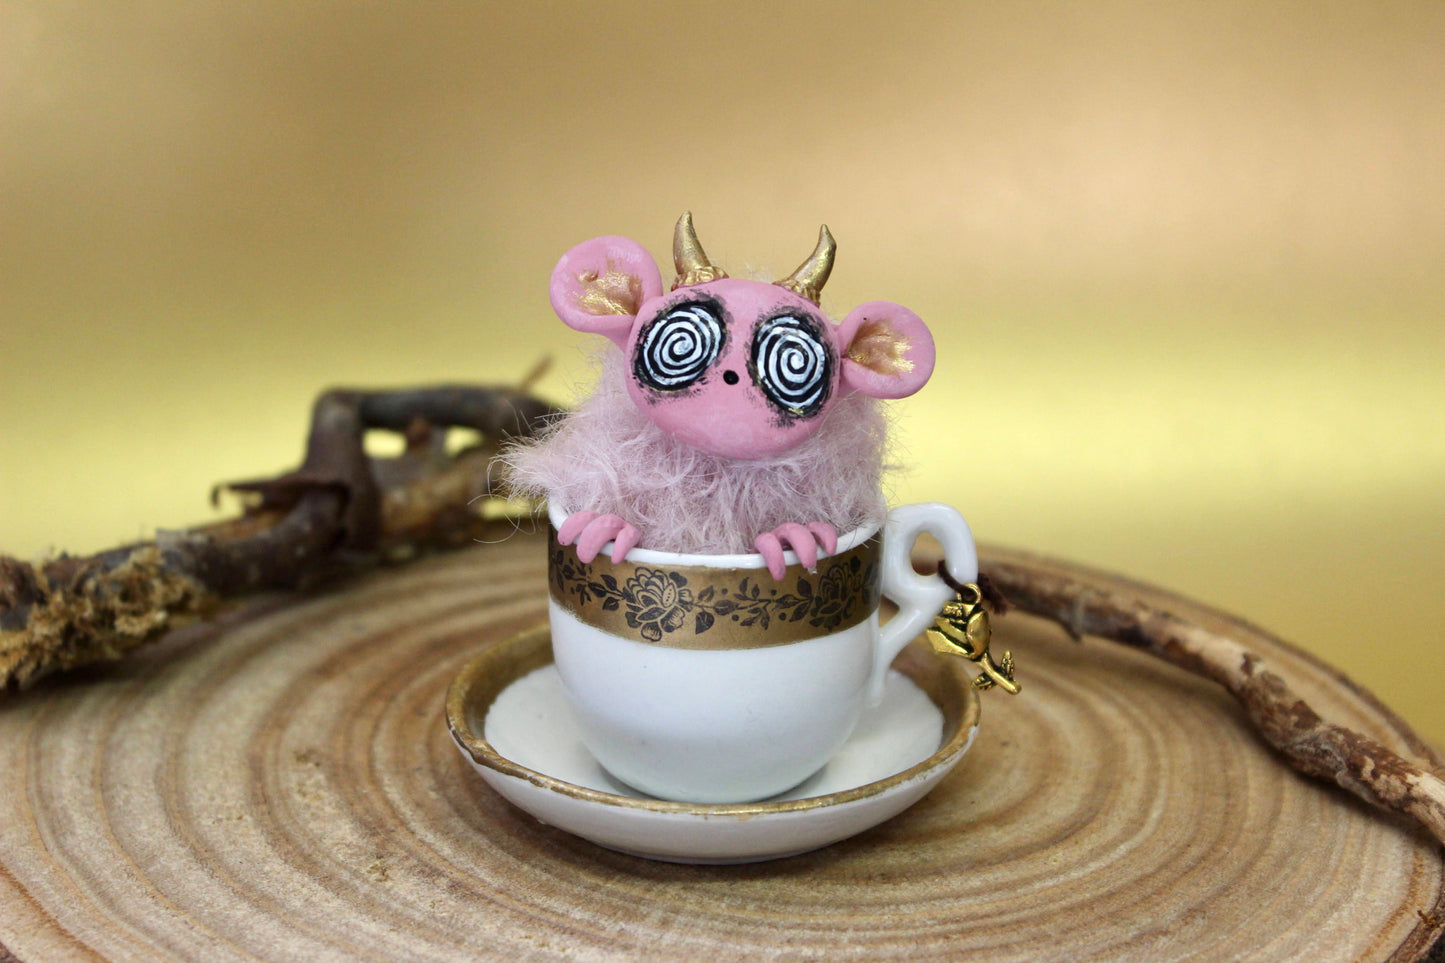 Ethel the Teacup Critter